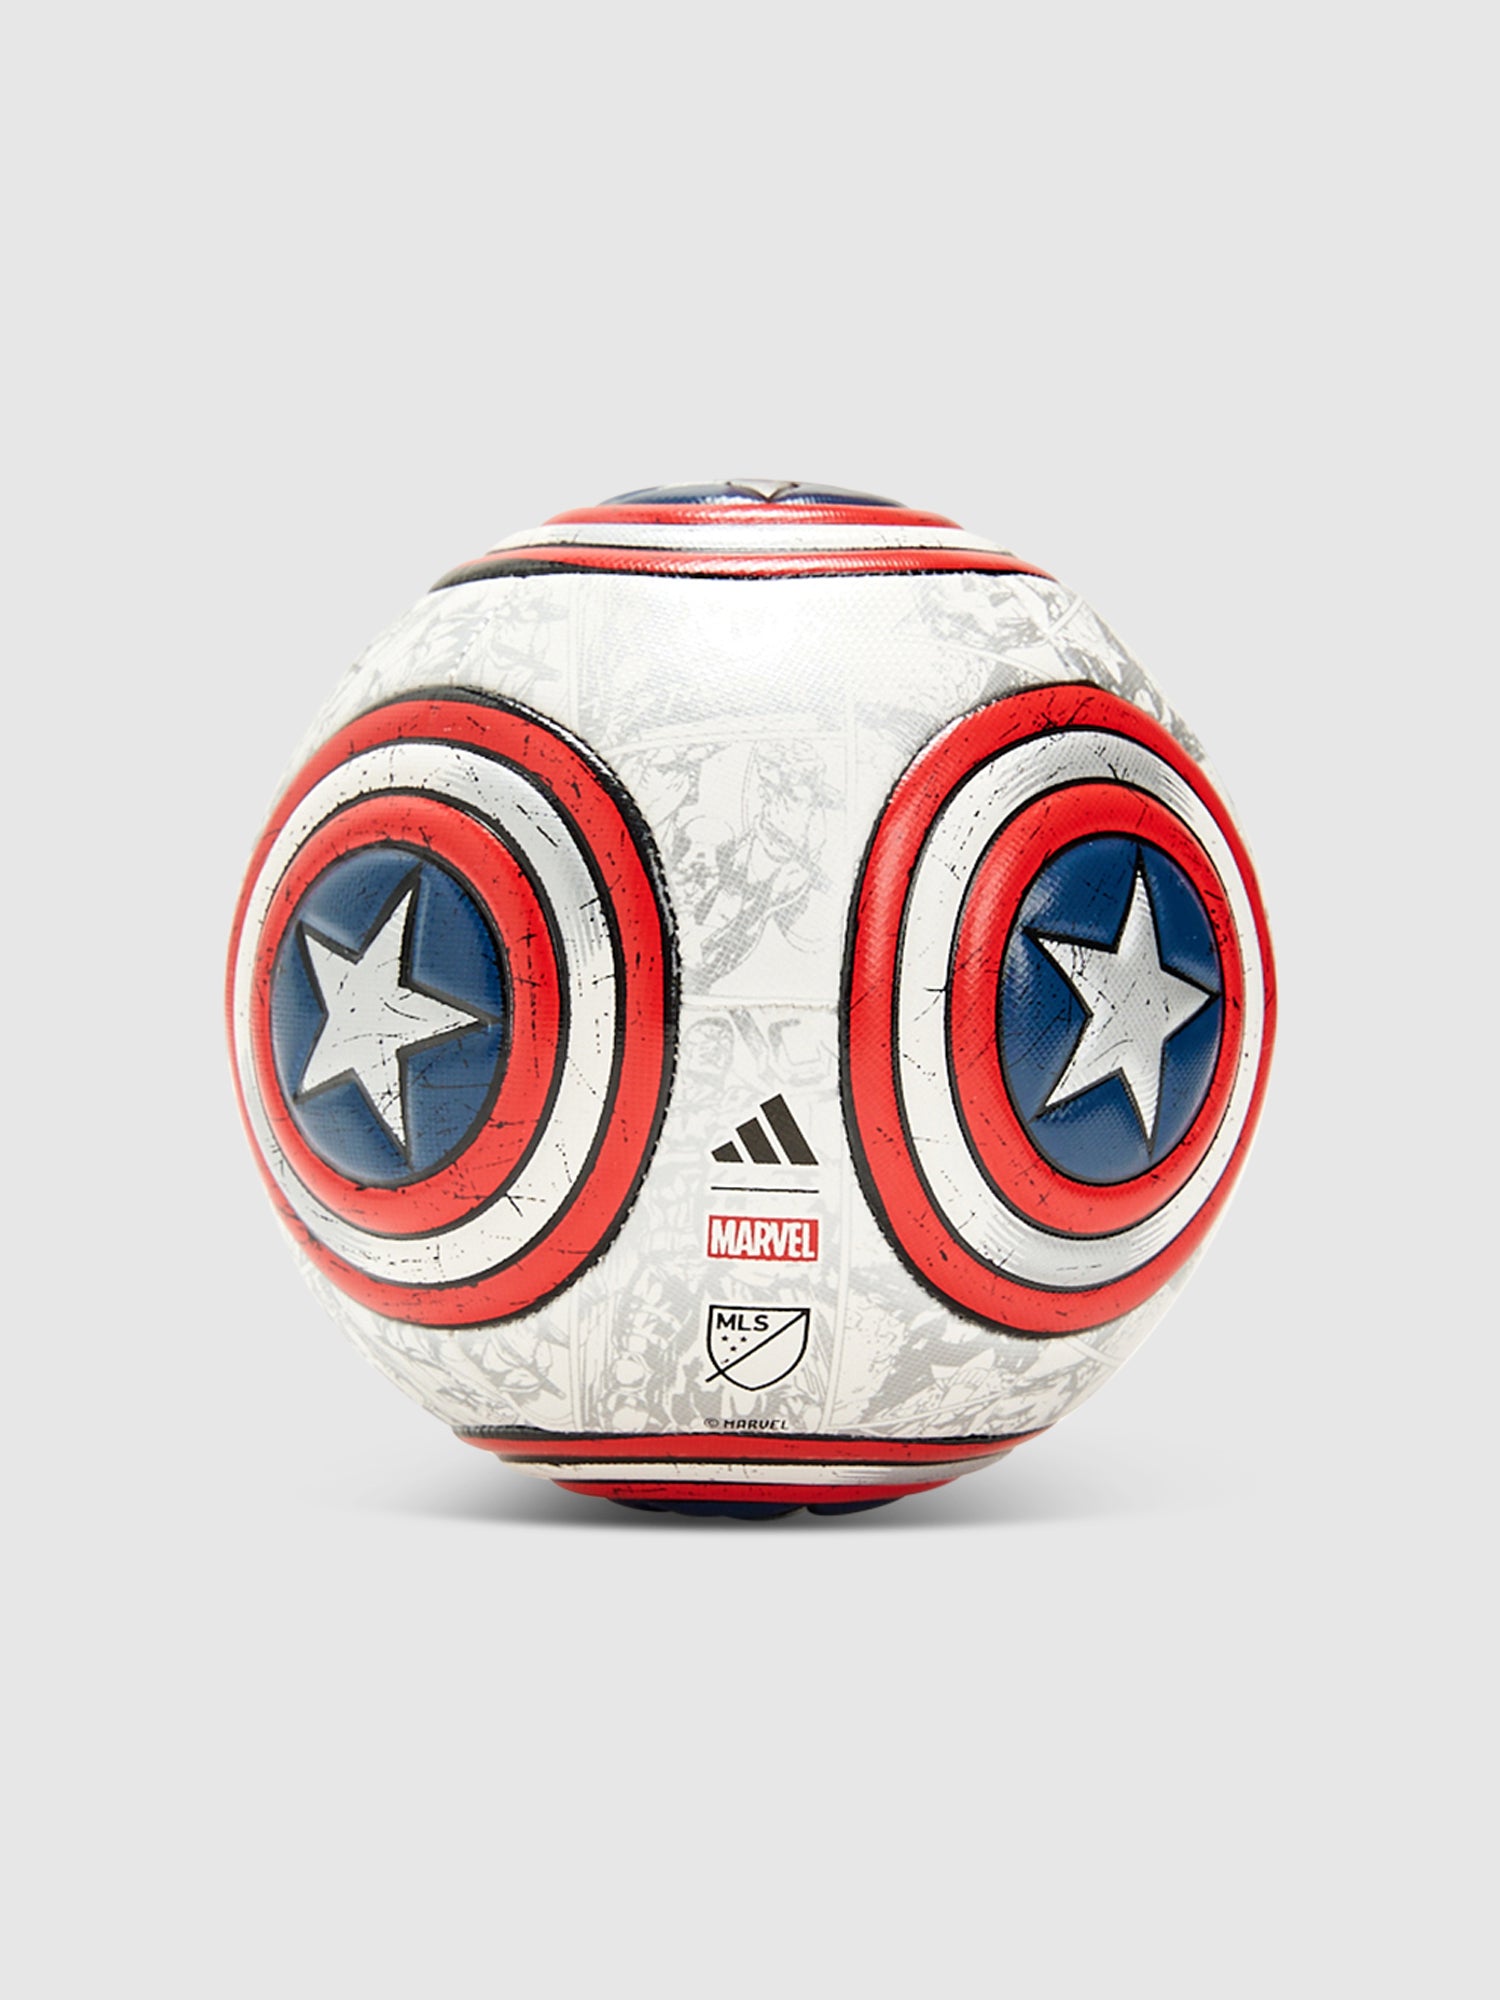 כדור כדורגל מיני קפטן אמריקה- adidas performance|אדידס פרפורמנס